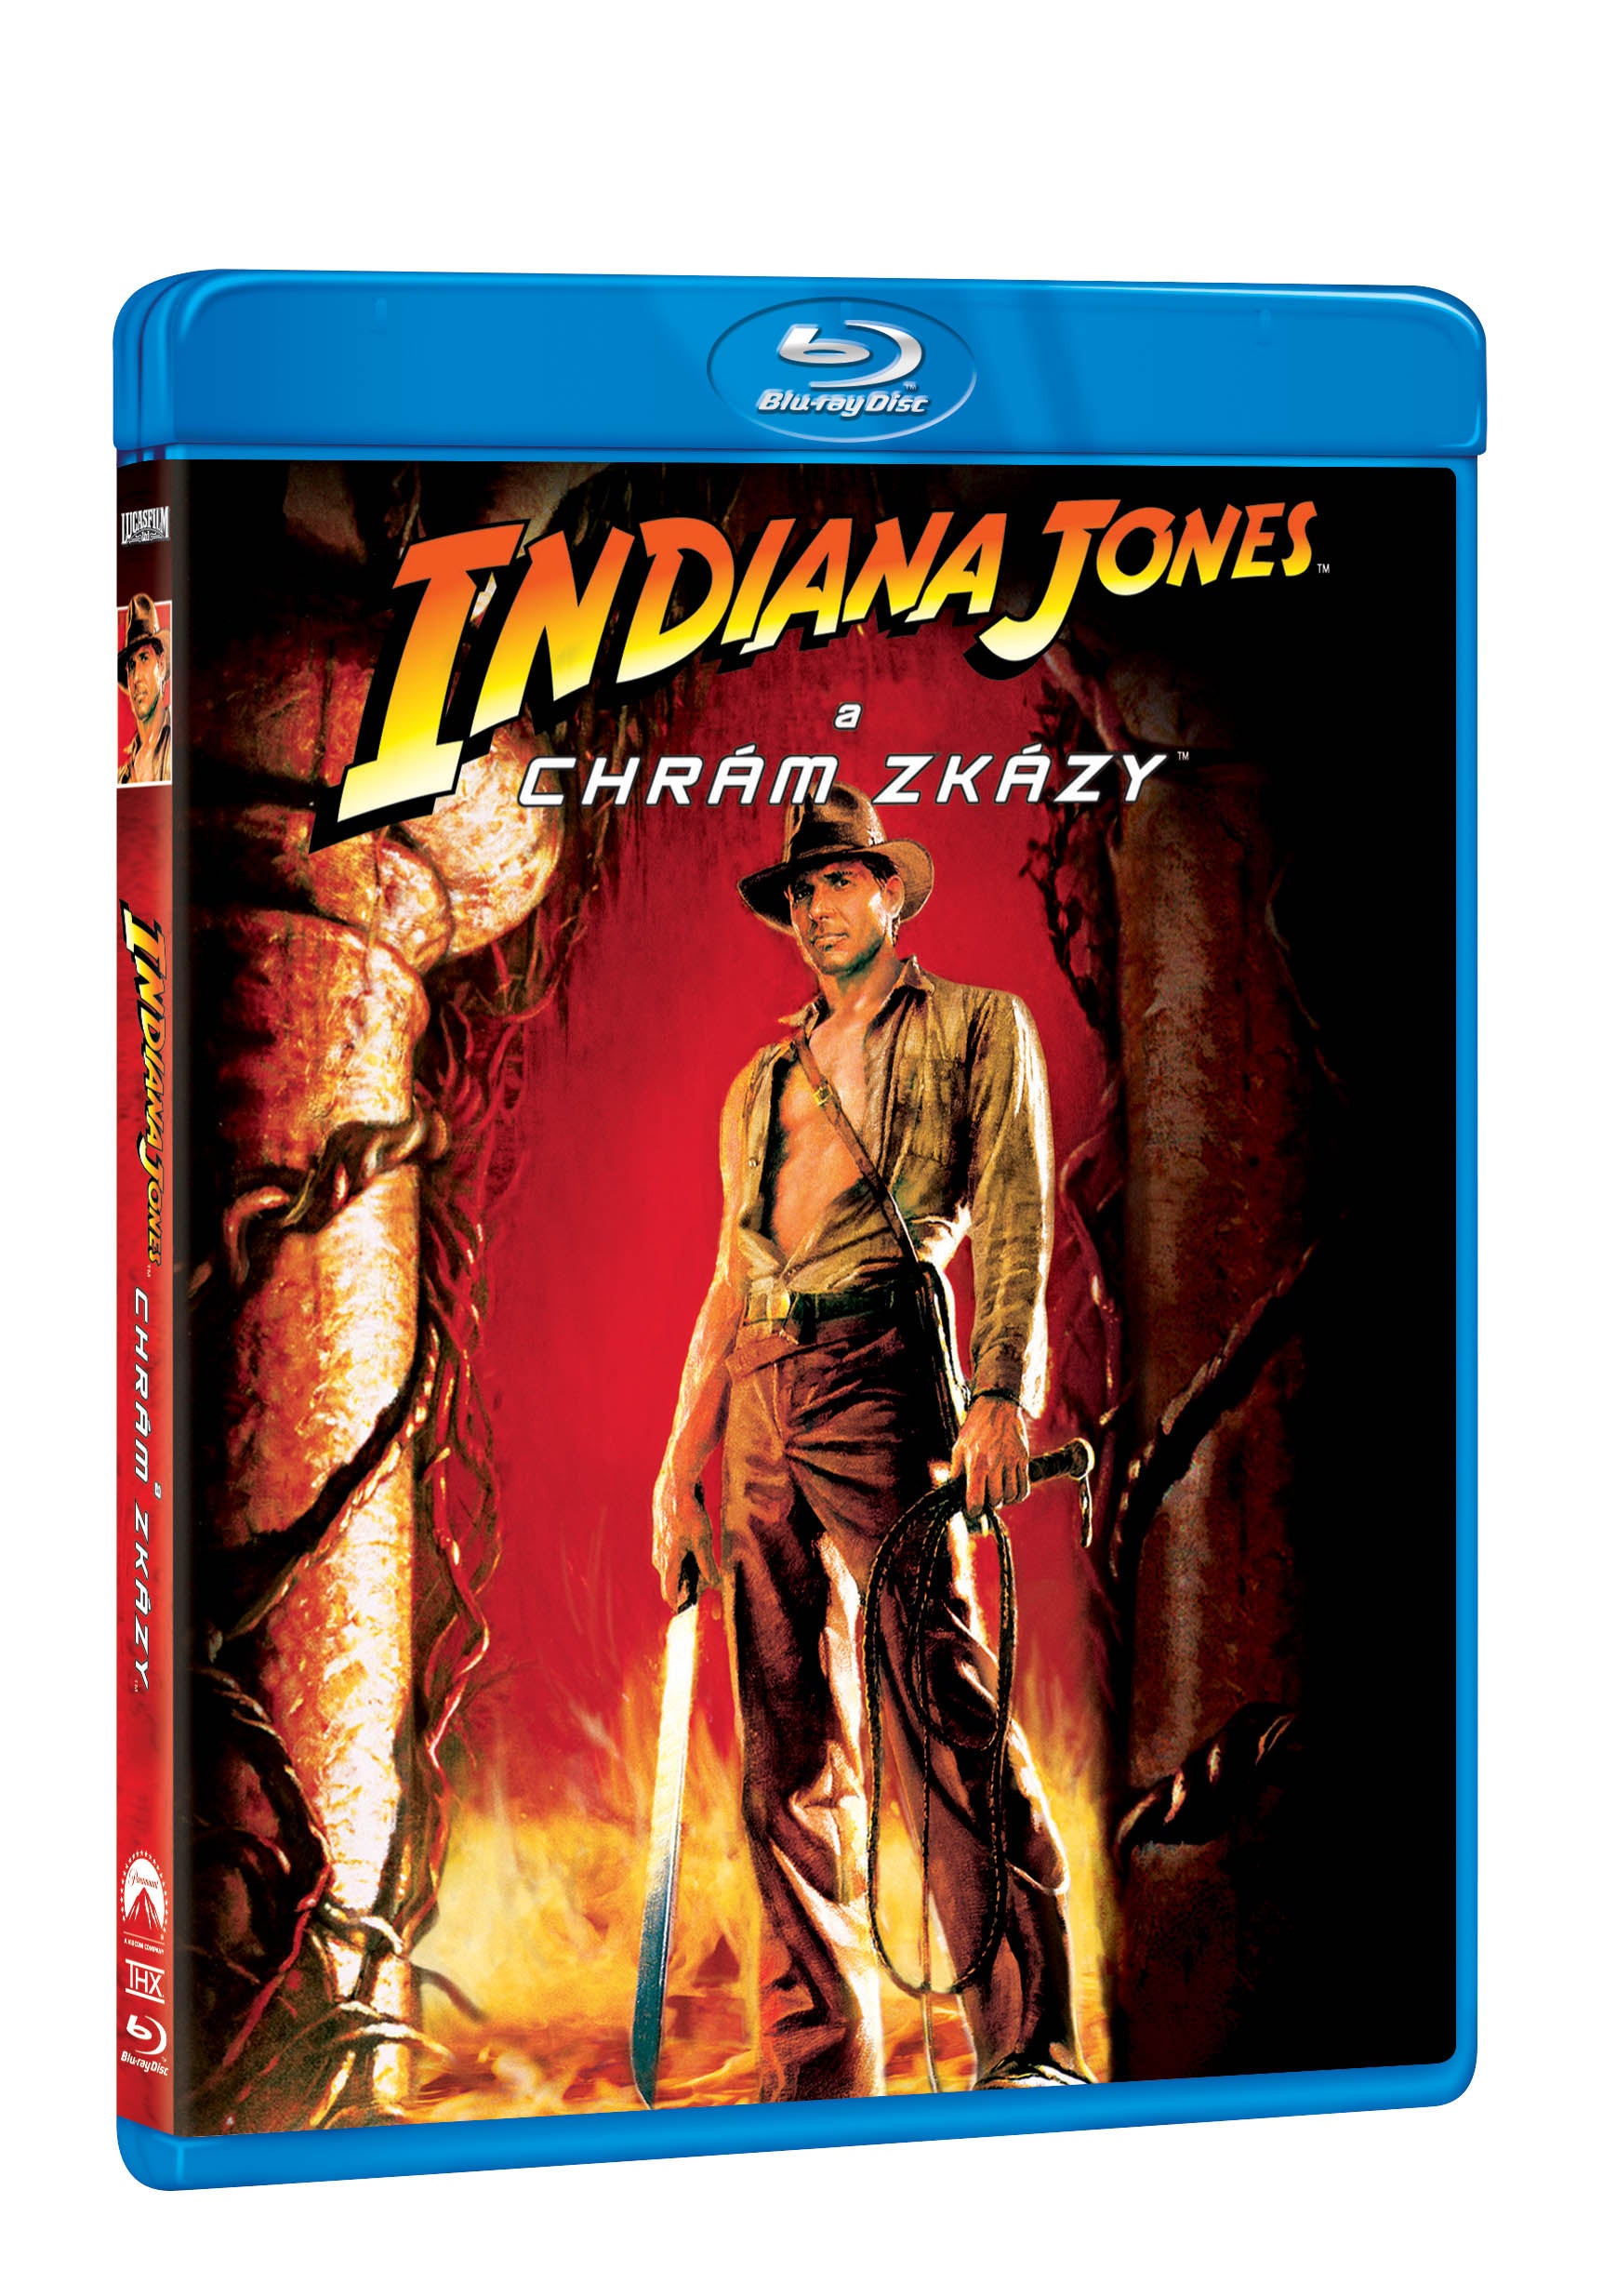 Indiana Jones a chram zkazy BD / Indiana Jones and the Temple of Doom - Czech version